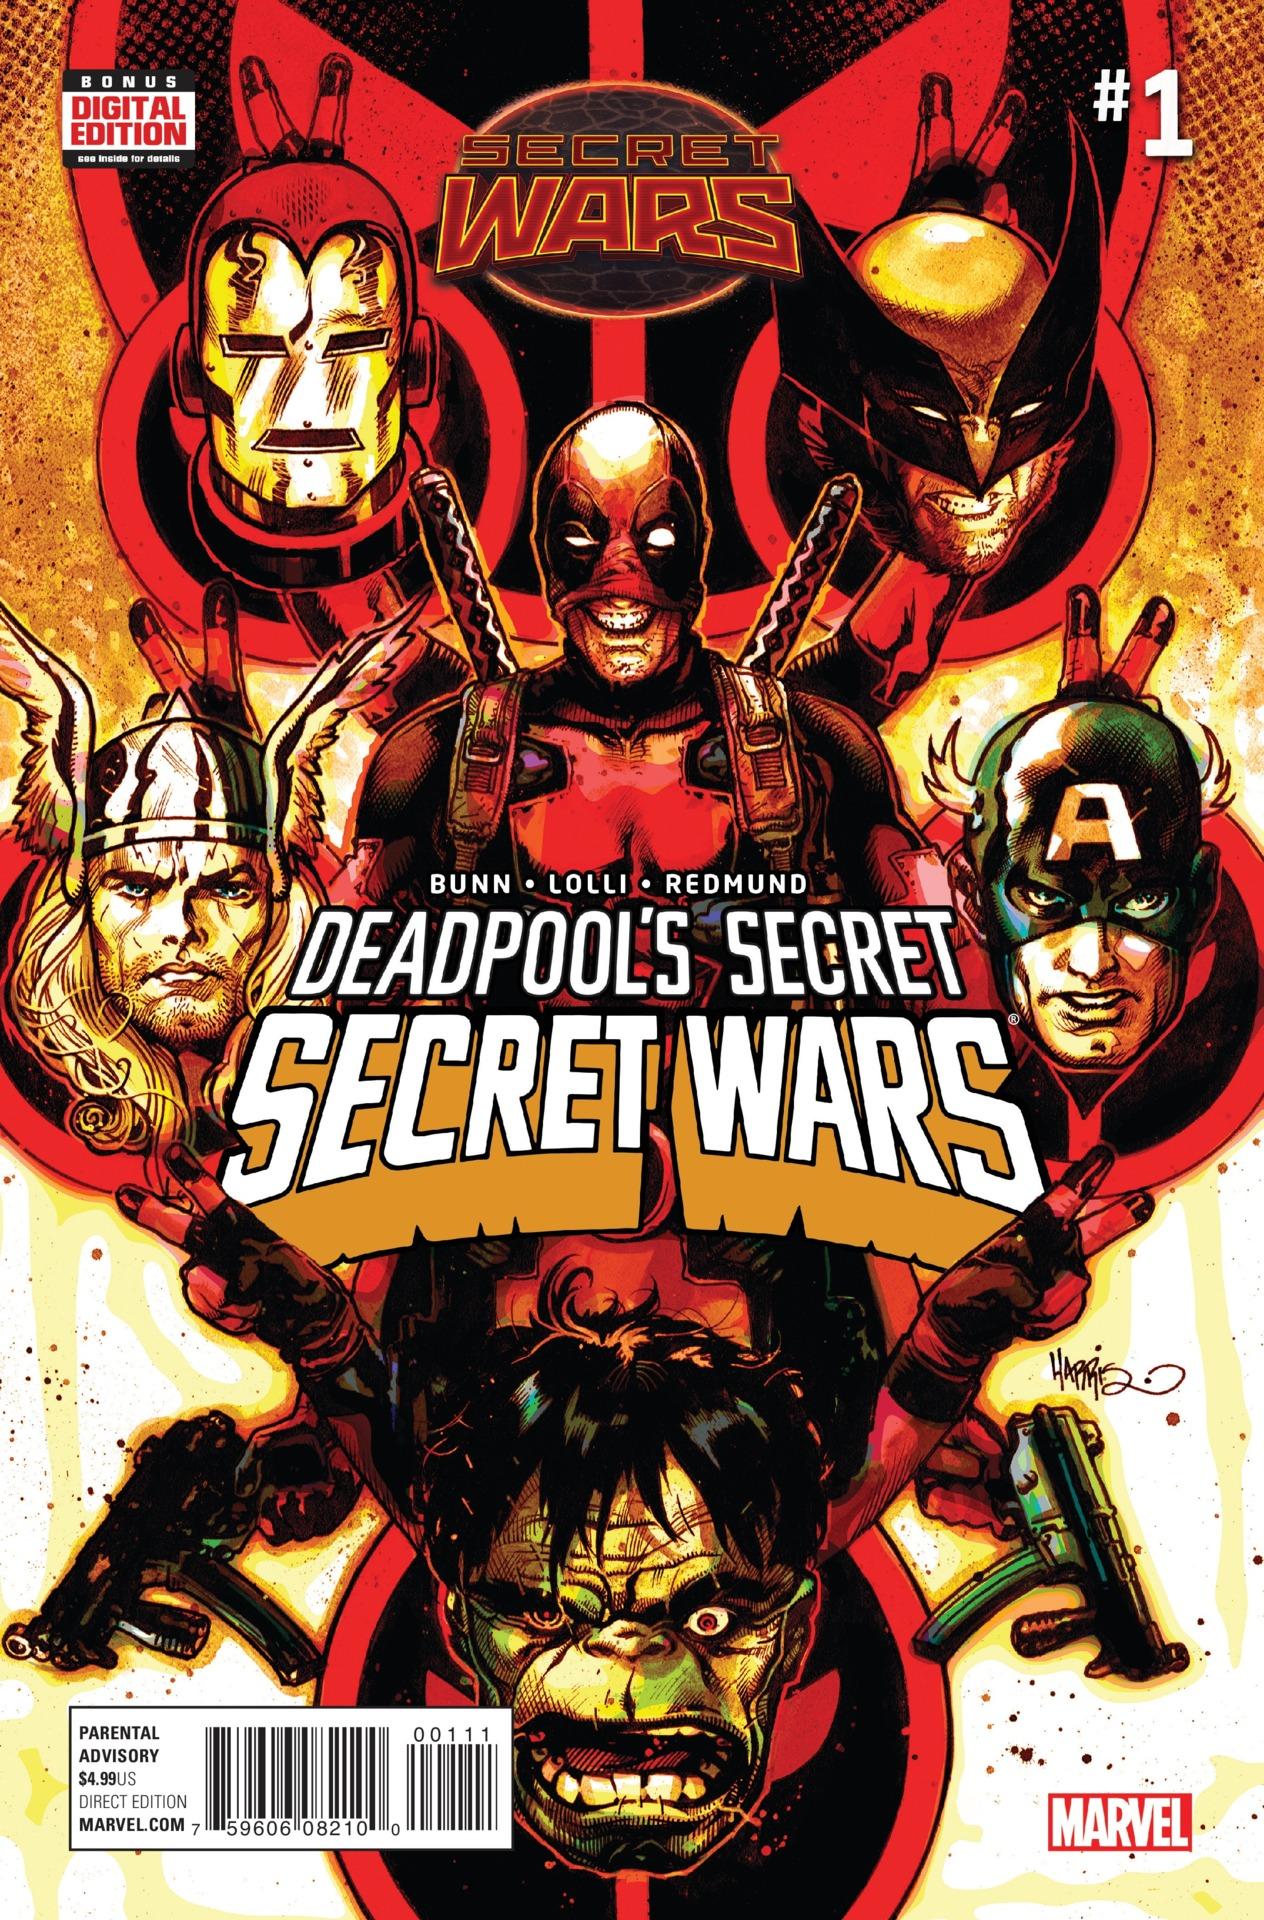 Deadpool's Secret Secret Wars Vol. 1 #1